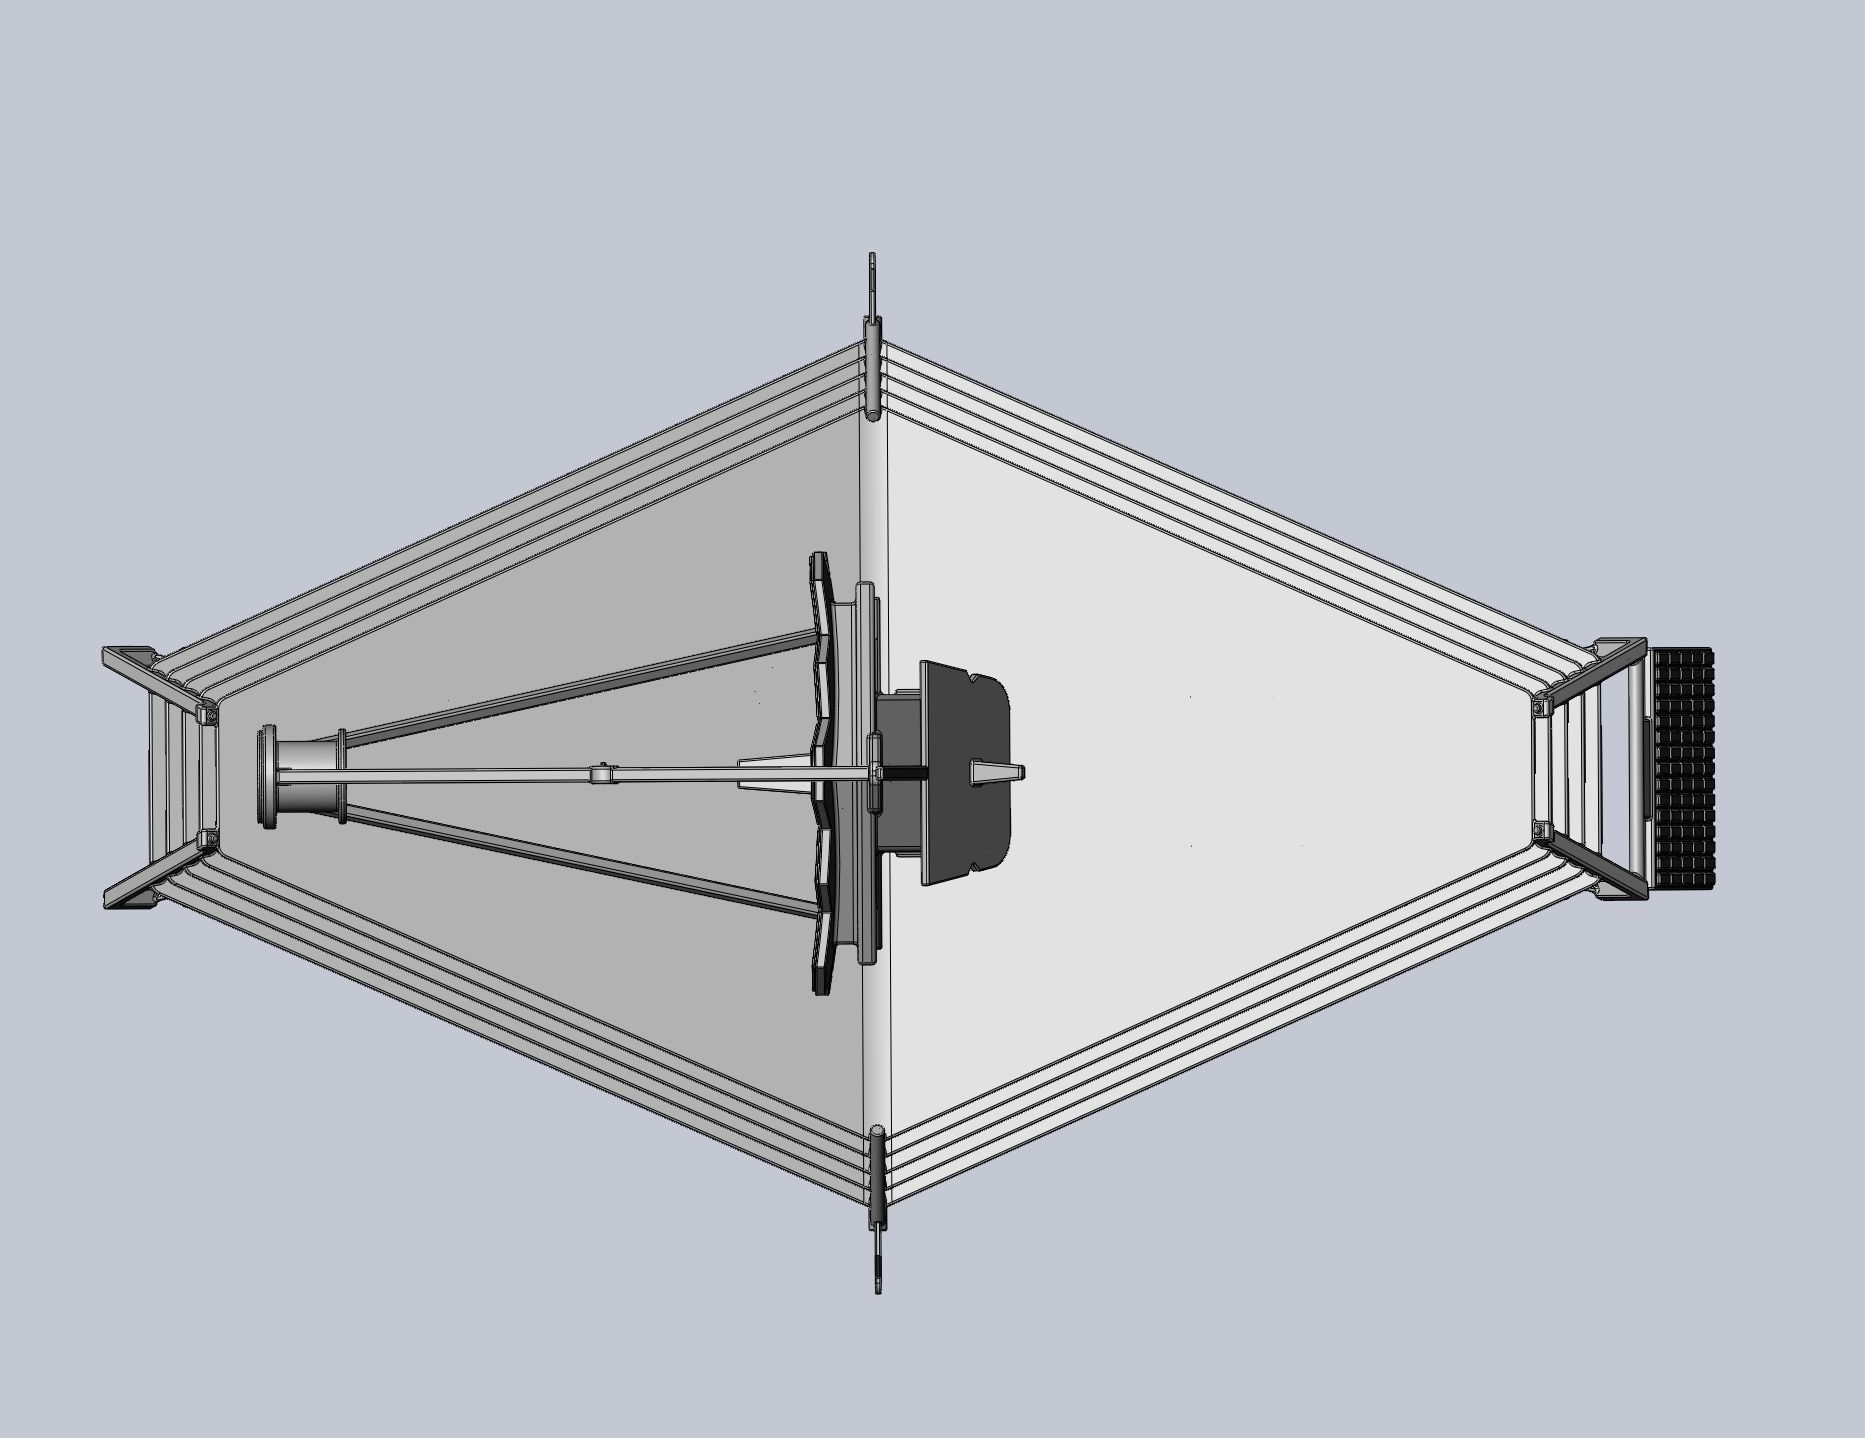 jw10.jpg Download DXF file James Webb Space Telescope JWST Basic Model • 3D printer template, julian-danzer